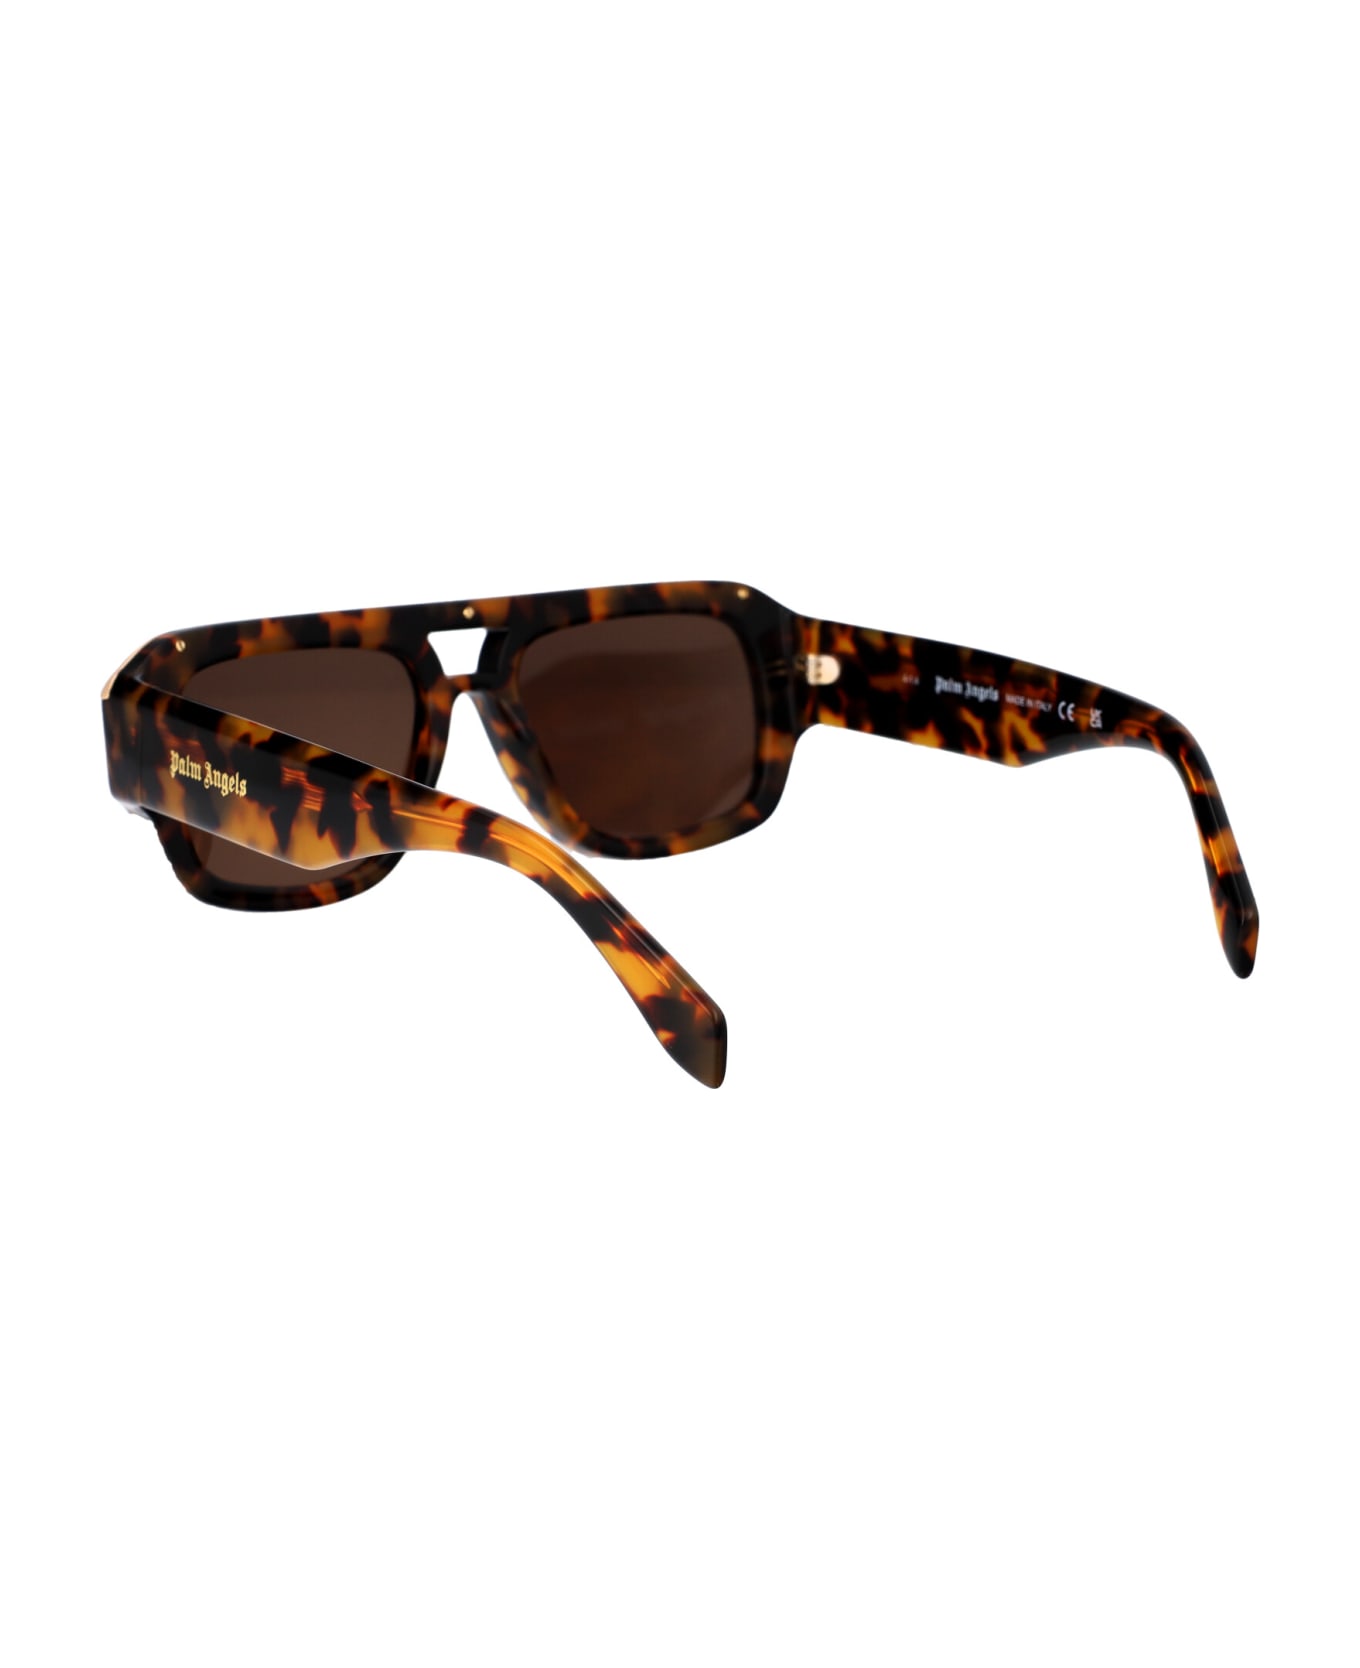 Palm Angels Stockton Sunglasses - 6064 HAVANA